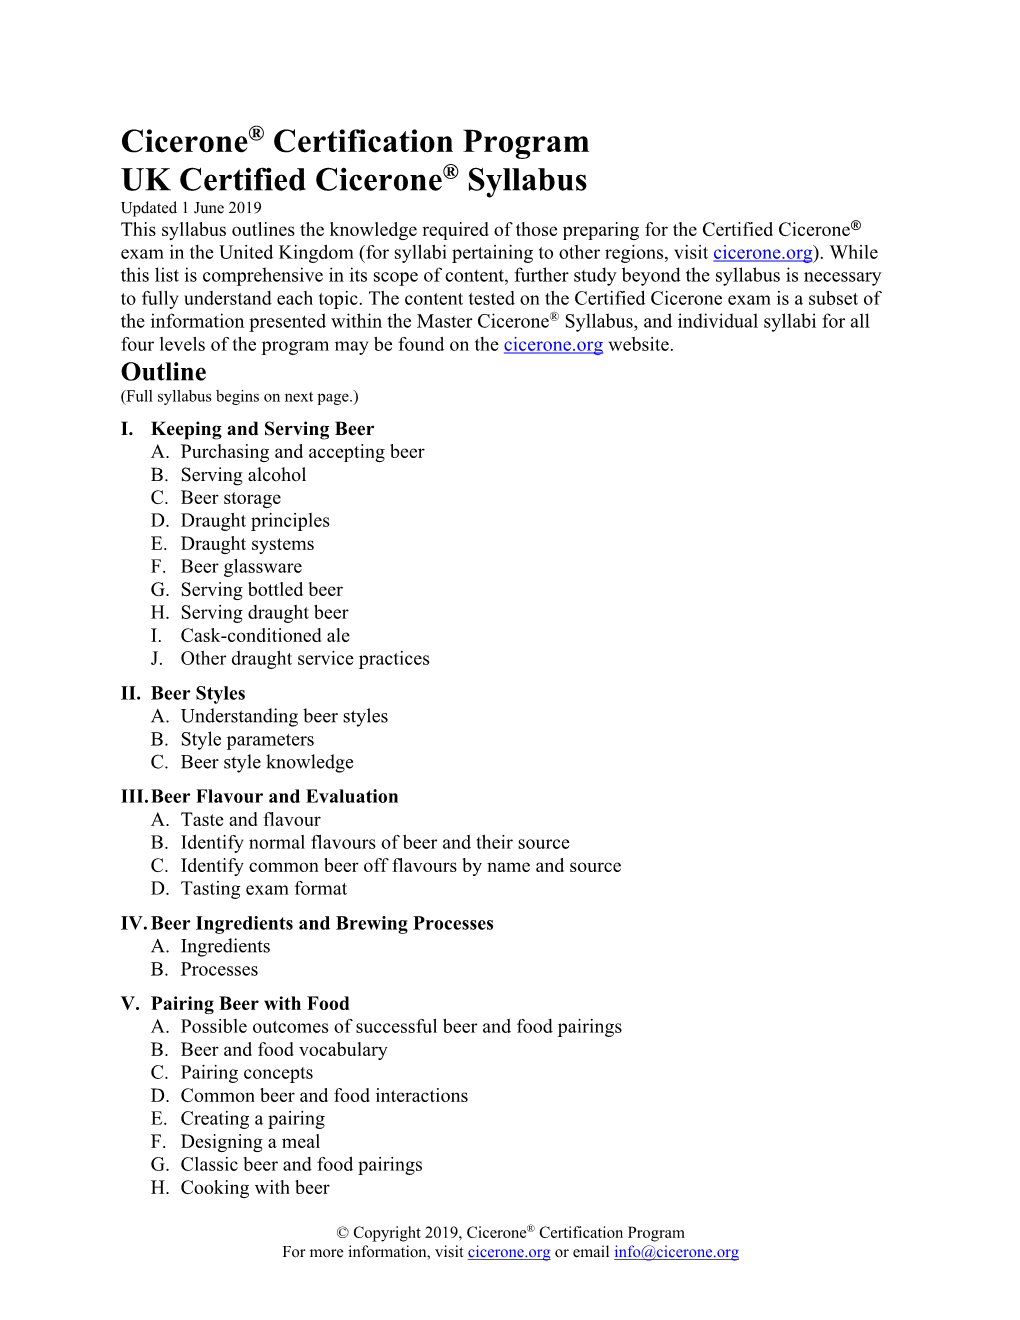 Cicerone® Certification Program UK Certified Cicerone® Syllabus